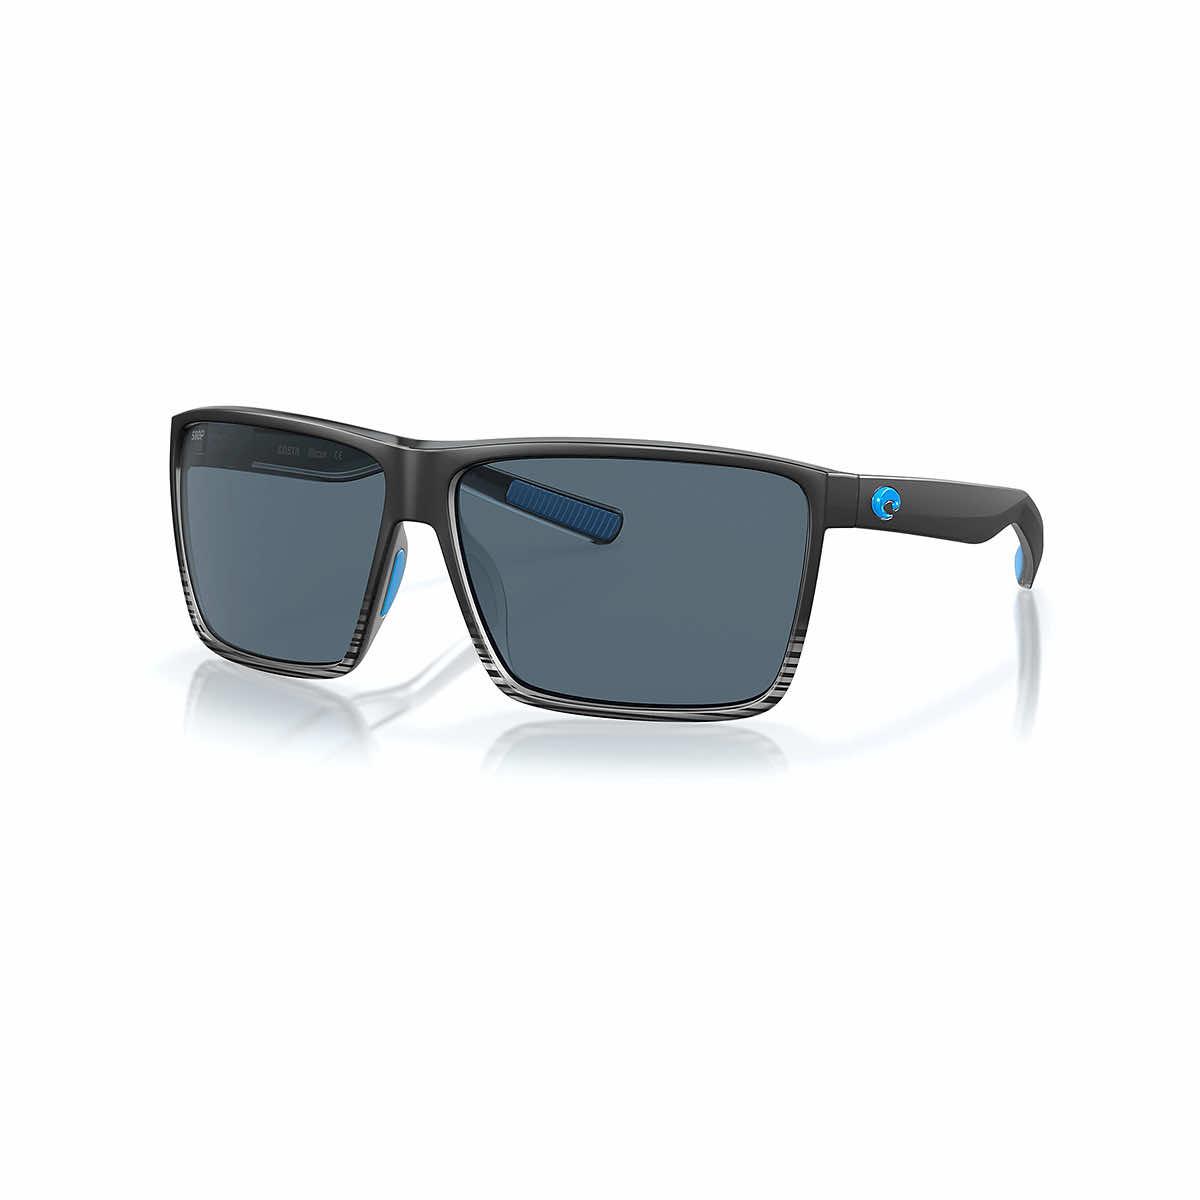  Rincon 580p Sunglasses - Polarized Plastic